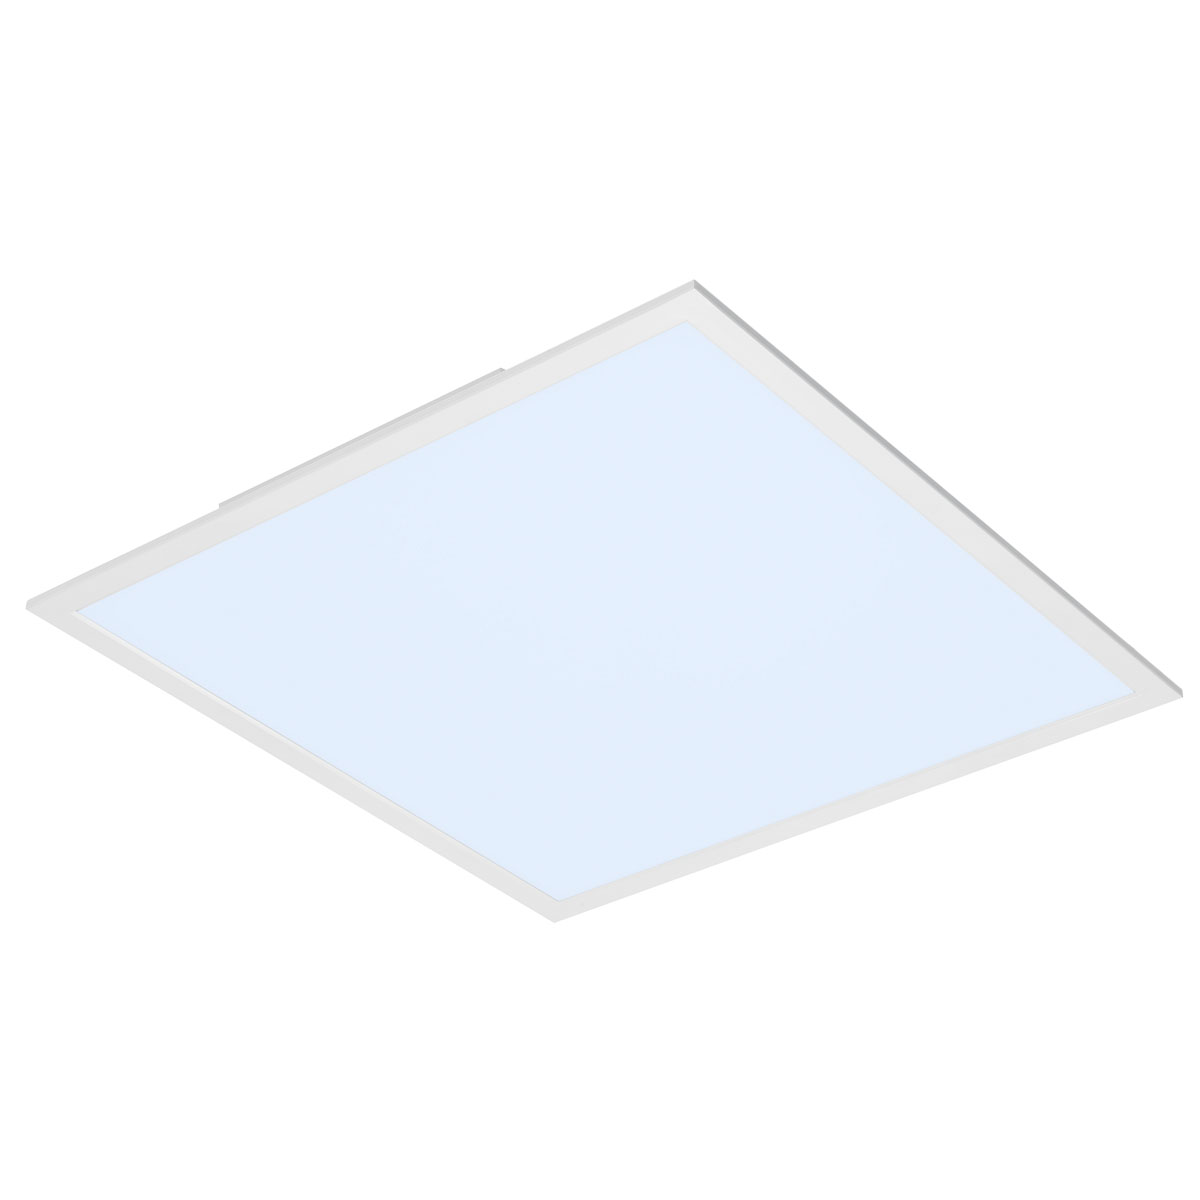 LED-Panel, 59x59x5cm, dimmbar, weiß